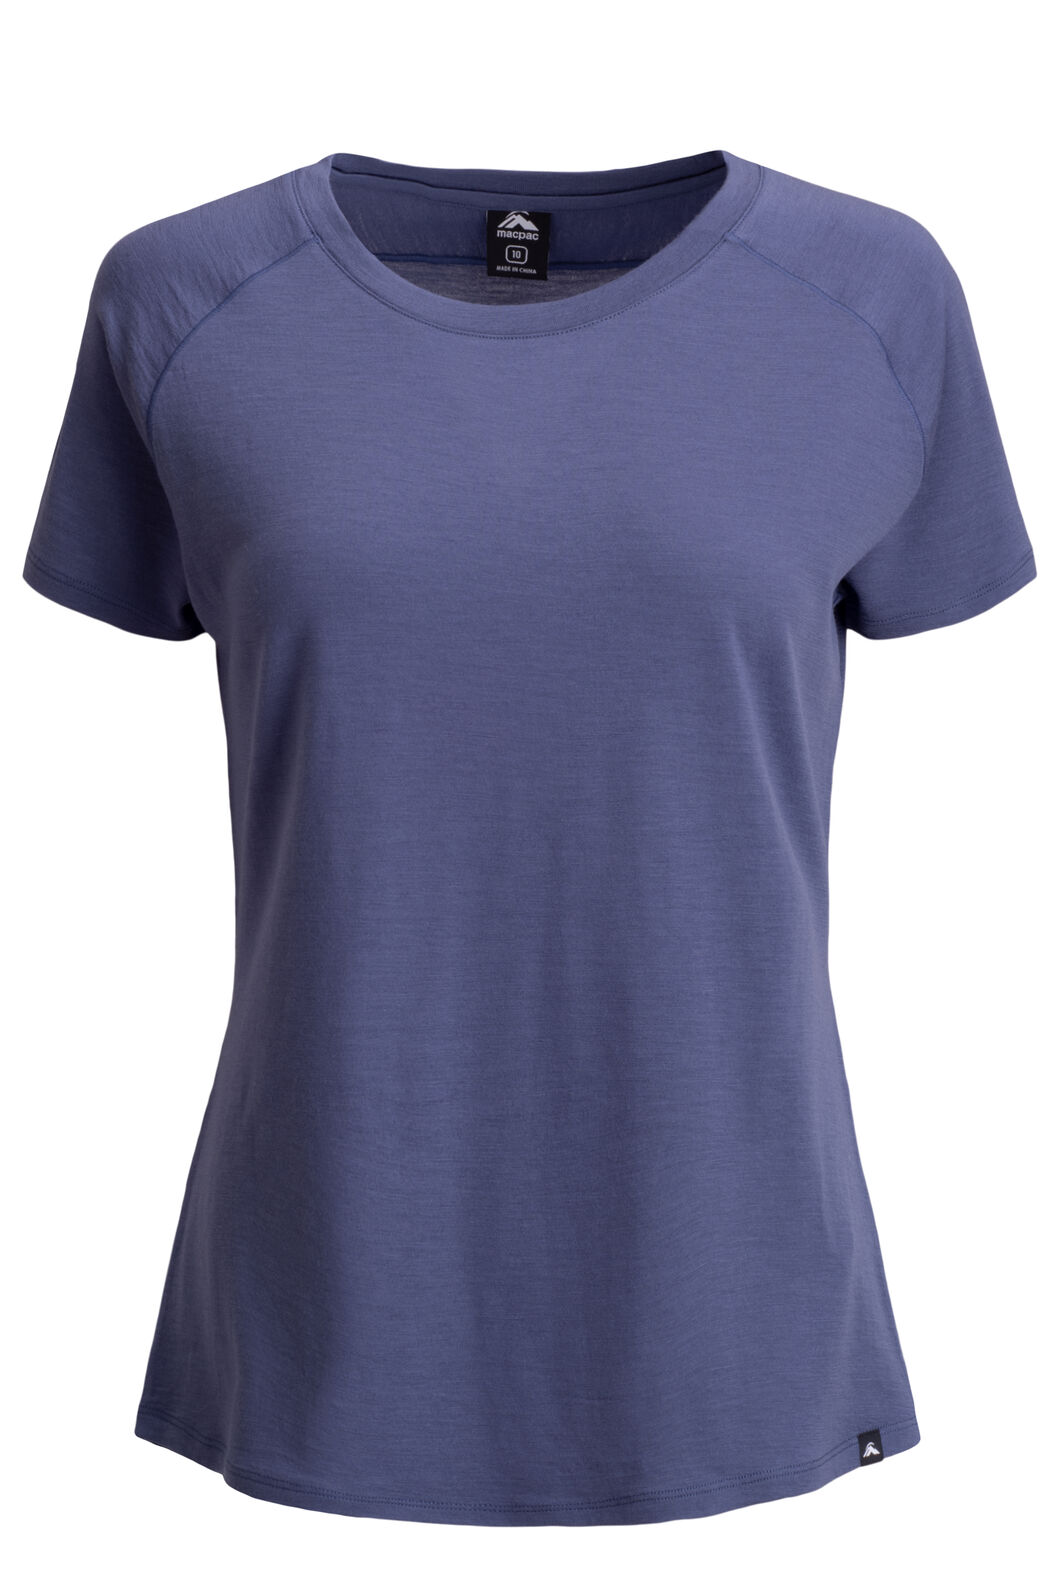 Macpac Women's Ella Merino T-Shirt, Blue Indigo, hi-res